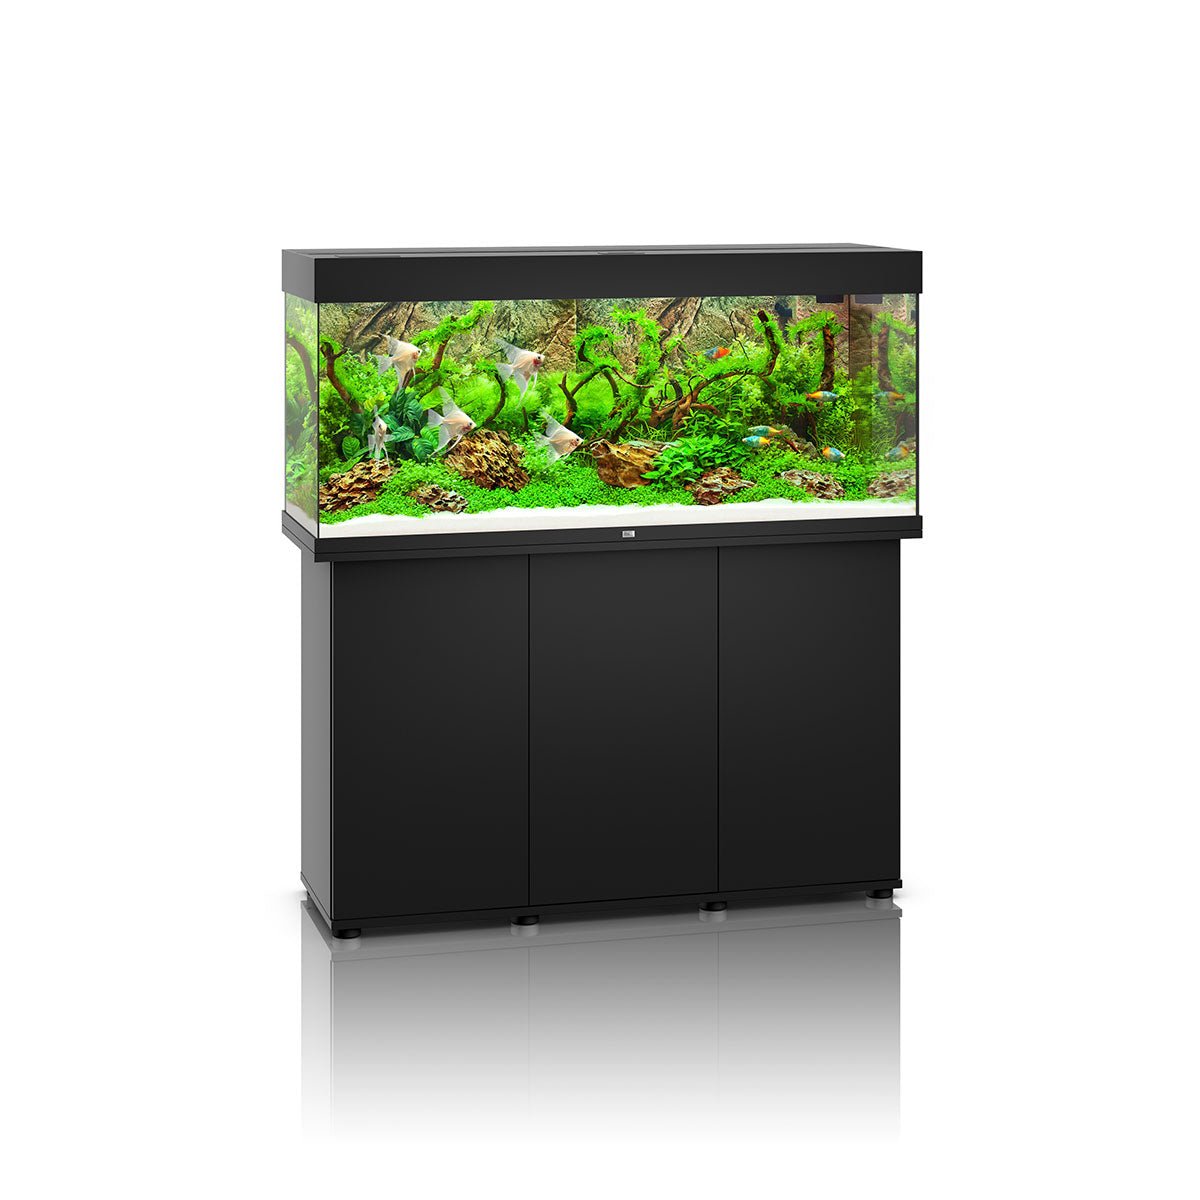 Juwel Rio 240 LED Aquarium and Cabinet (Black) - Charterhouse Aquatics